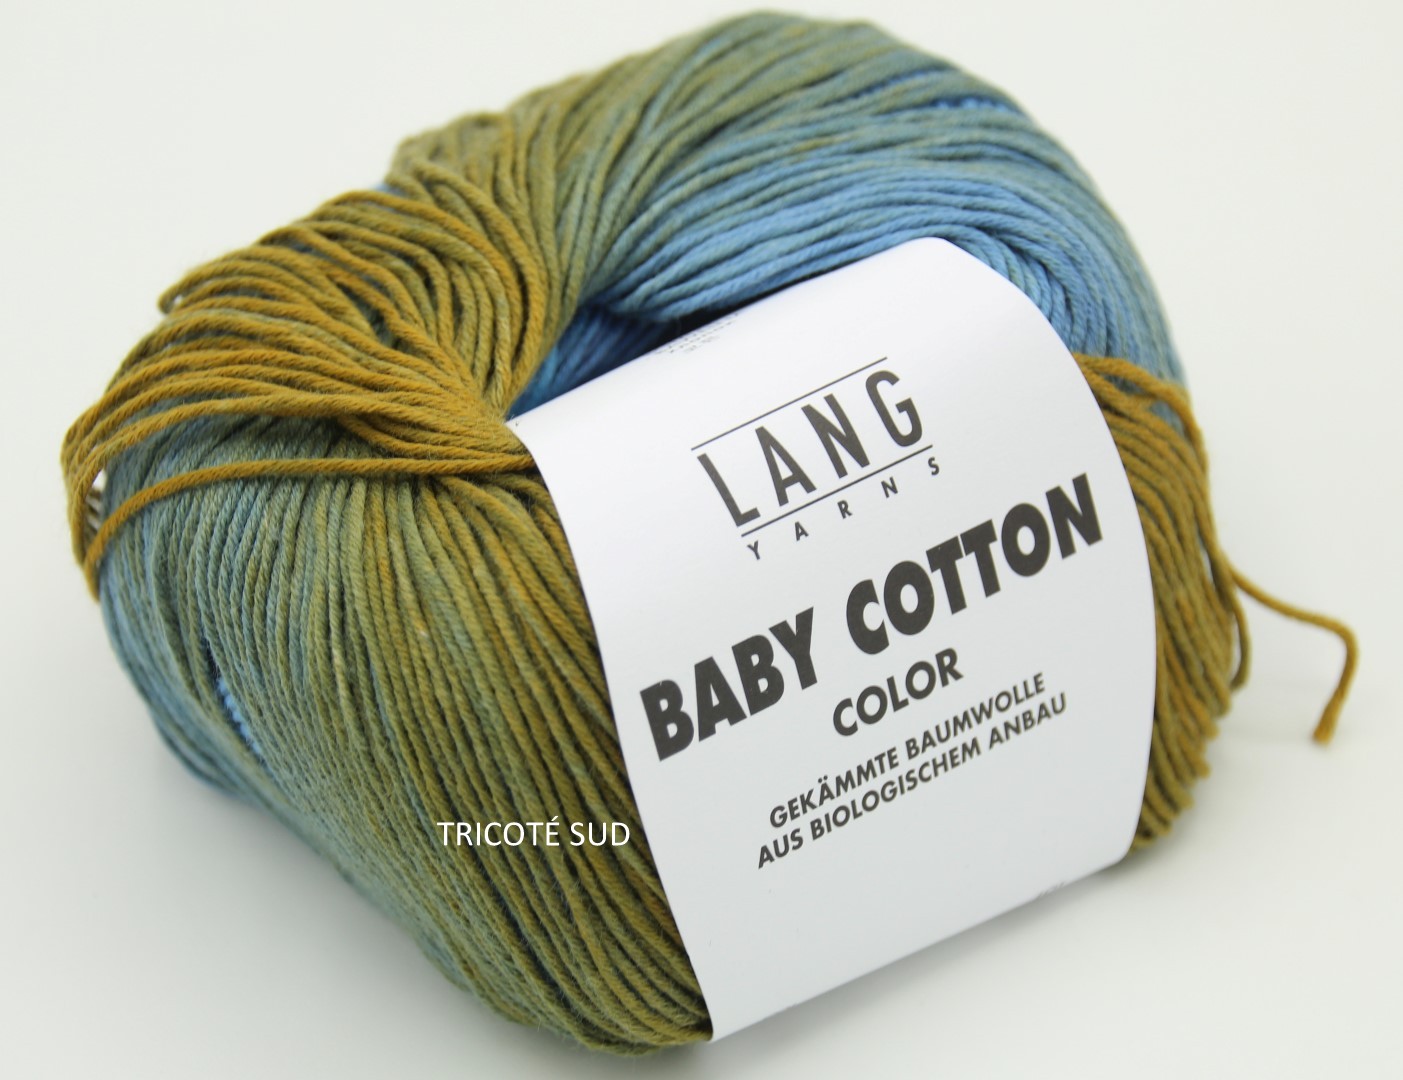 BABY COTTON COLOR LANG YARNS COLORIS 151 (1) (Large)